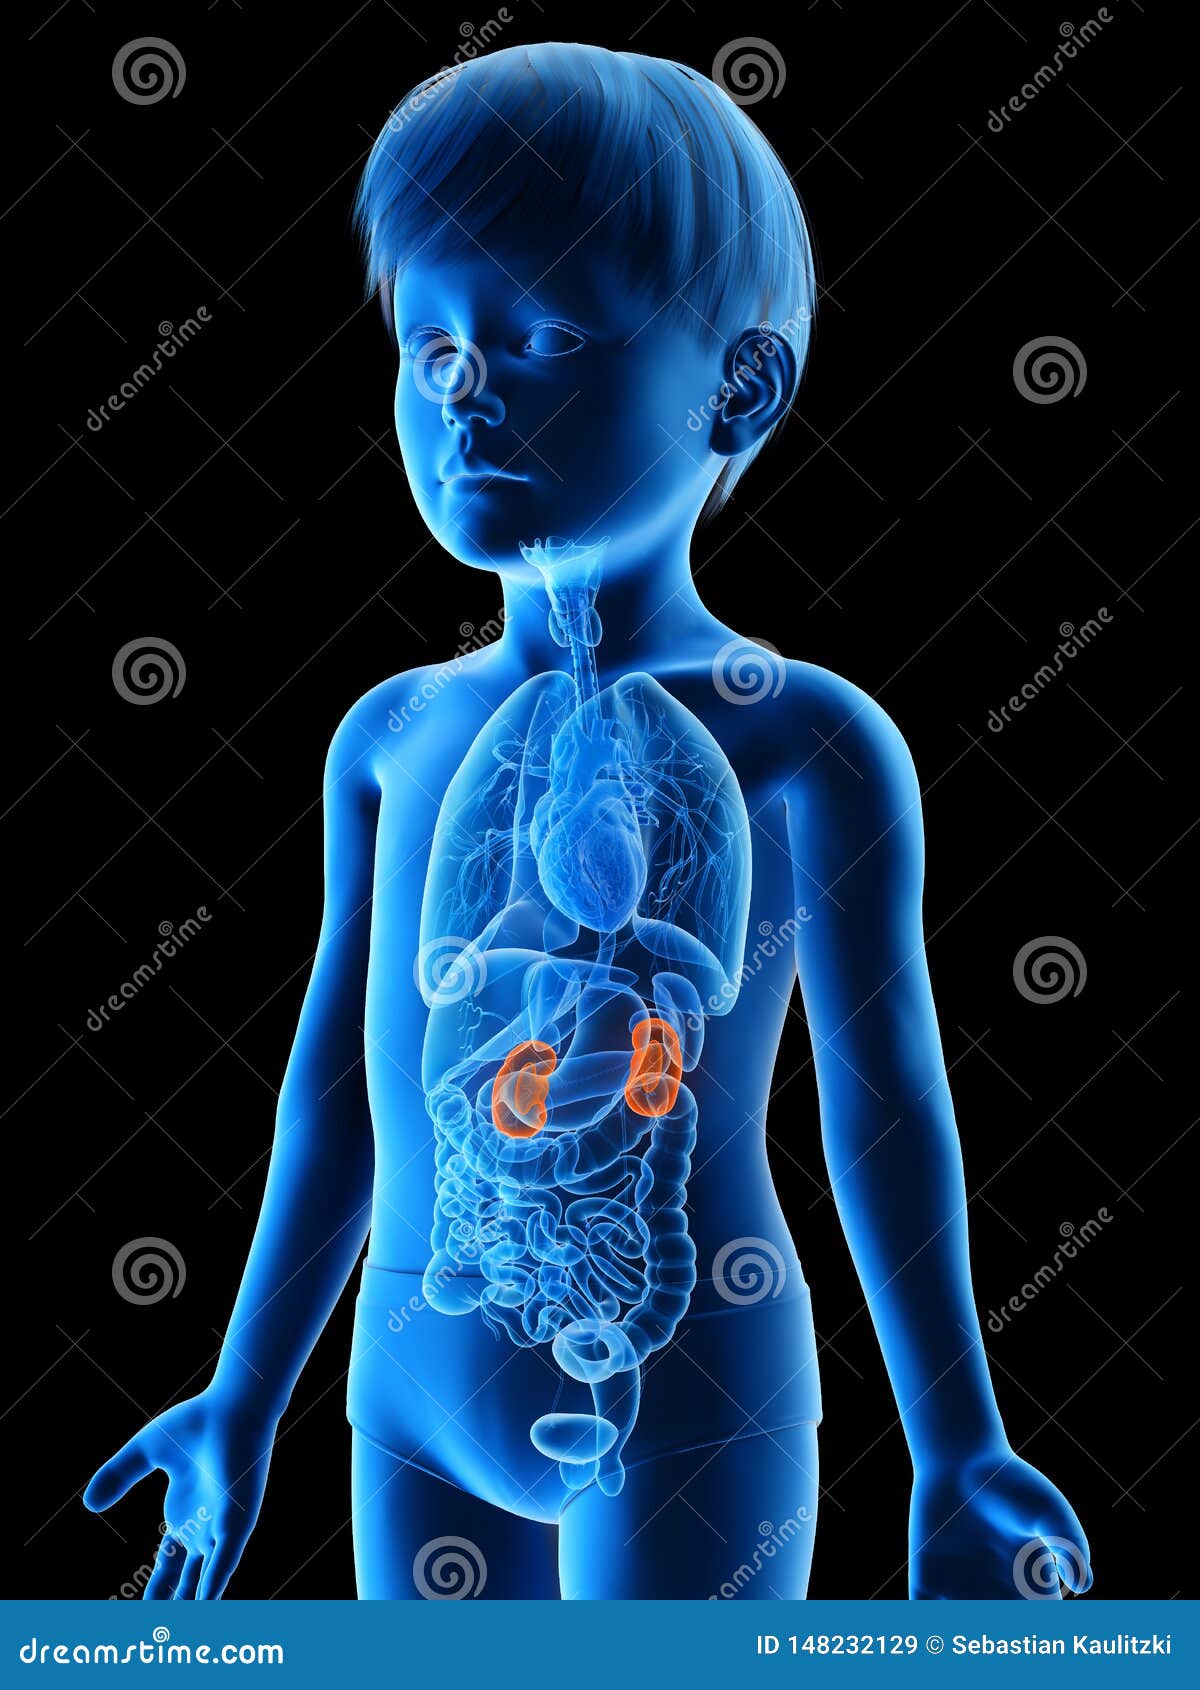 A boys kidneys stock illustration. Illustration of human - 148232129